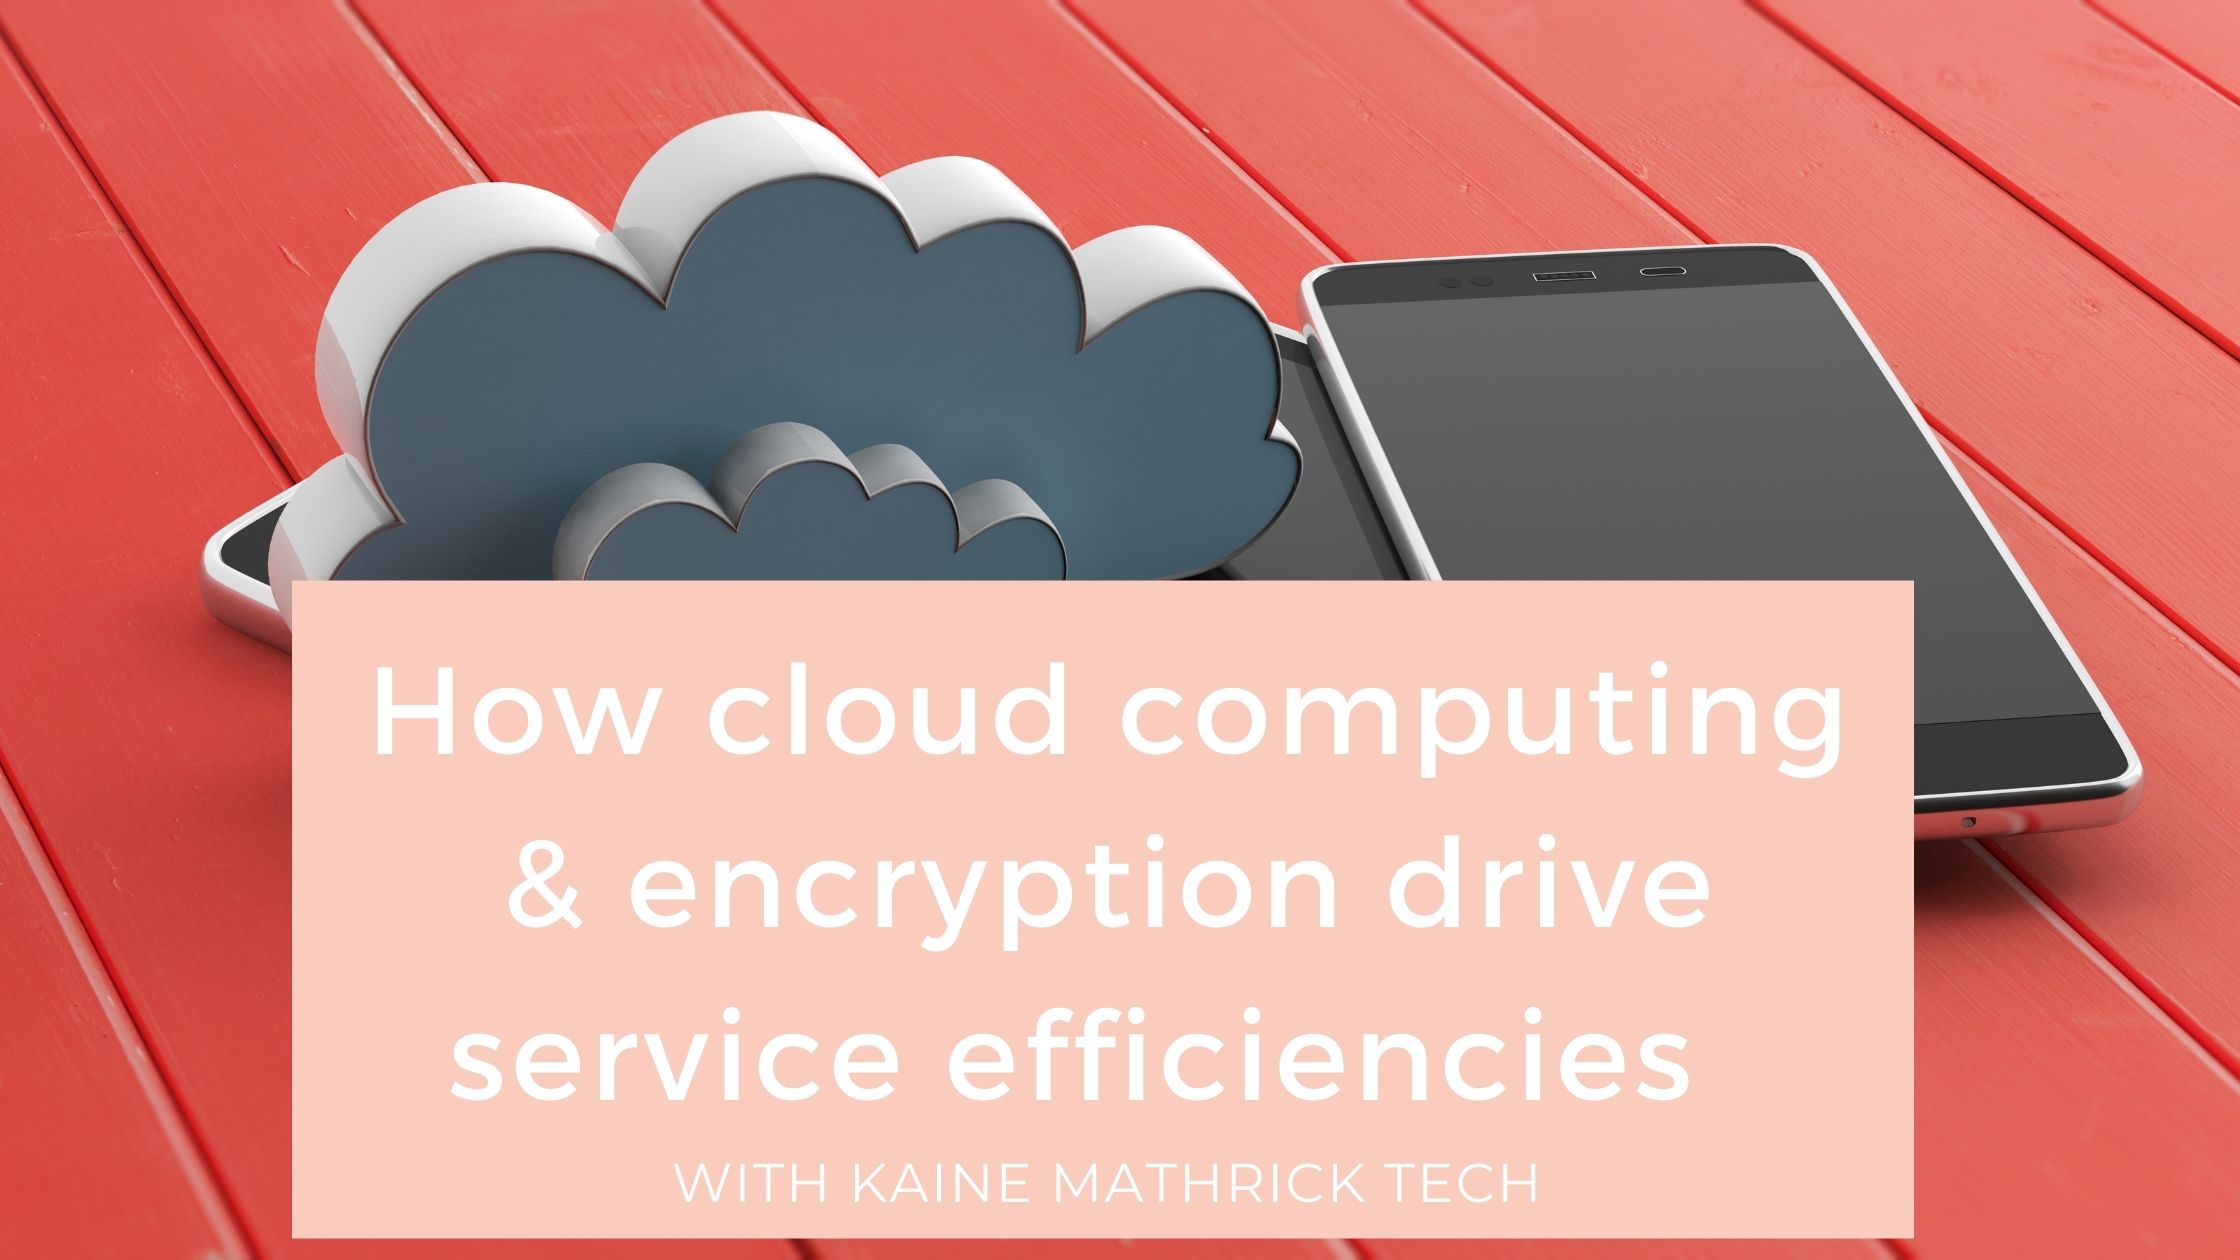 Cloud Computing and encryption